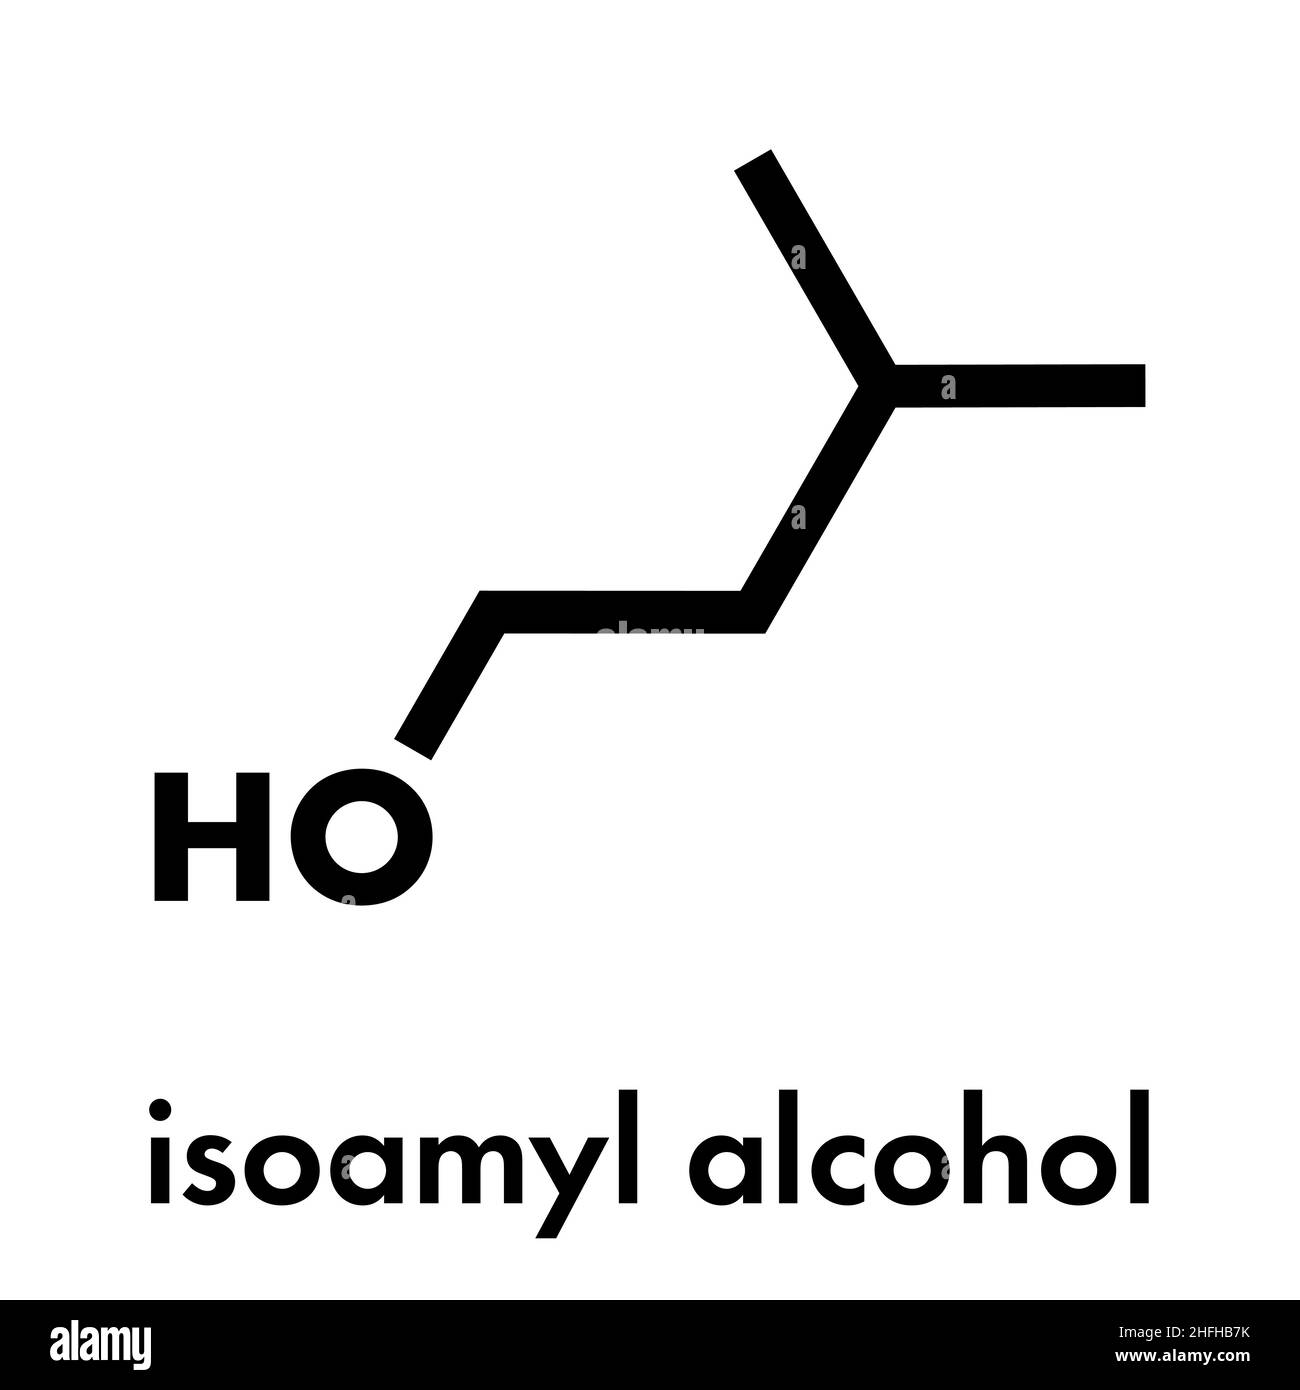 Isoamyl nitrite popper drug molecule. Also used as antidote to cyanide poisoning. Skeletal formula. Stock Vector